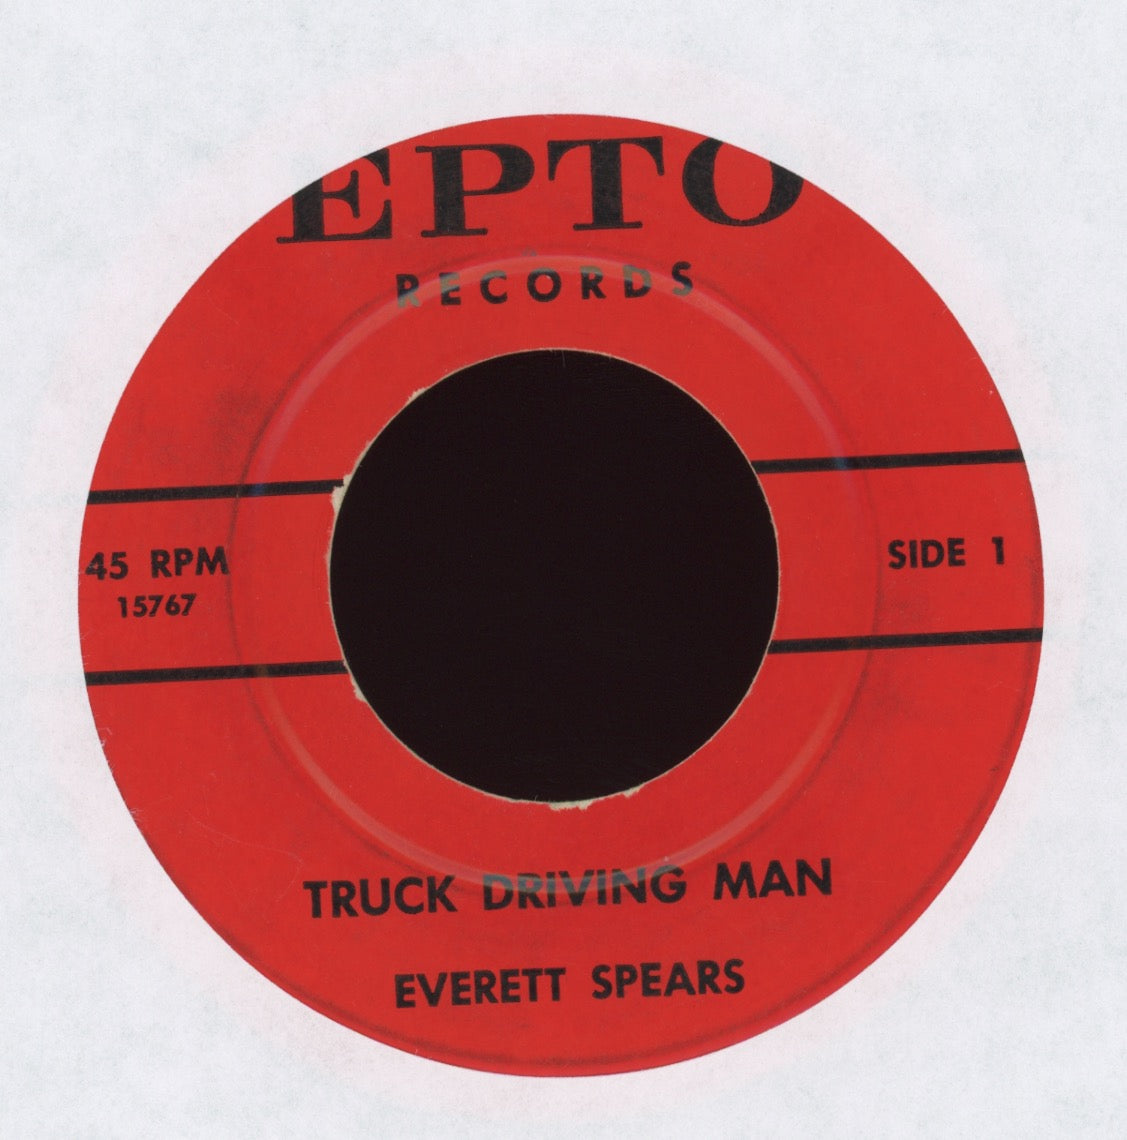 Everett Spears - Truck Driving Man on EPTO Rite Press Rockabilly